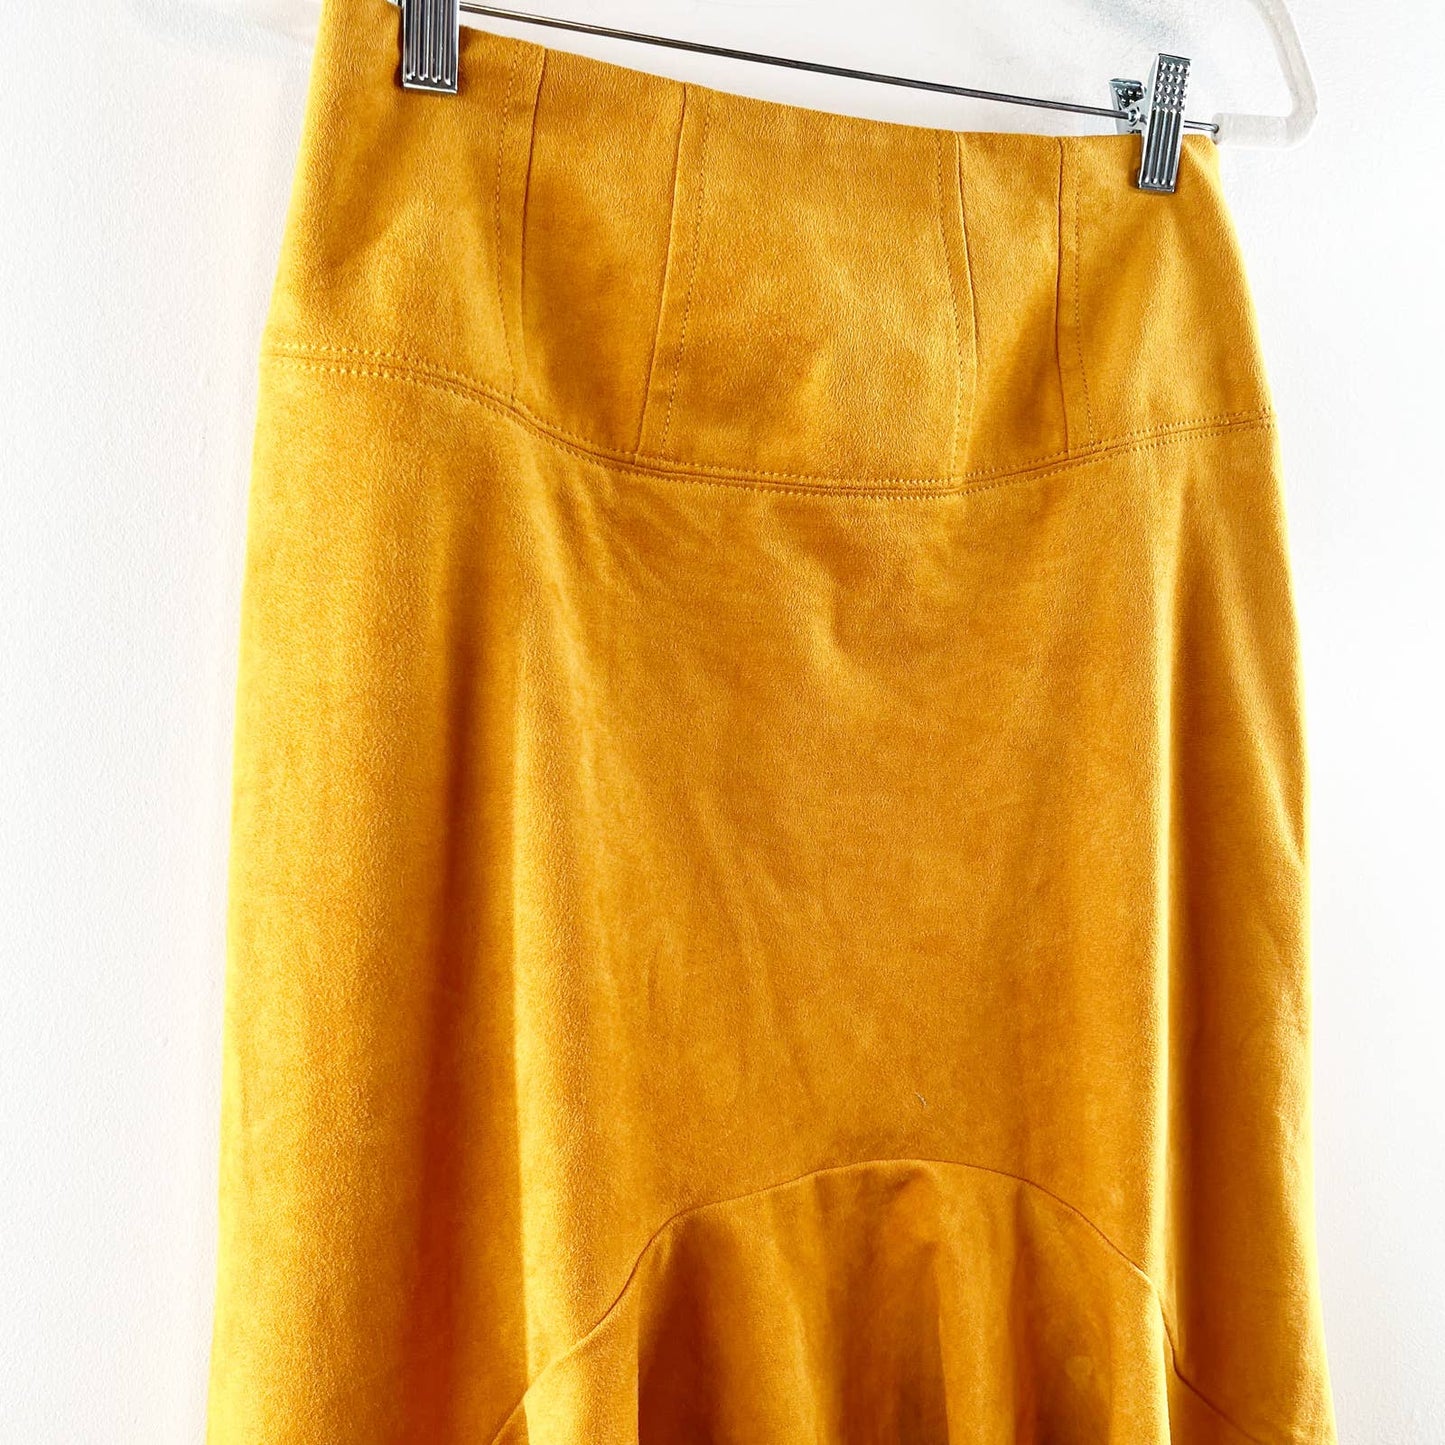 Maeve Cosima High Waisted Flounced Faux Suede Midi Skirt Mustard Yellow 4 Petite